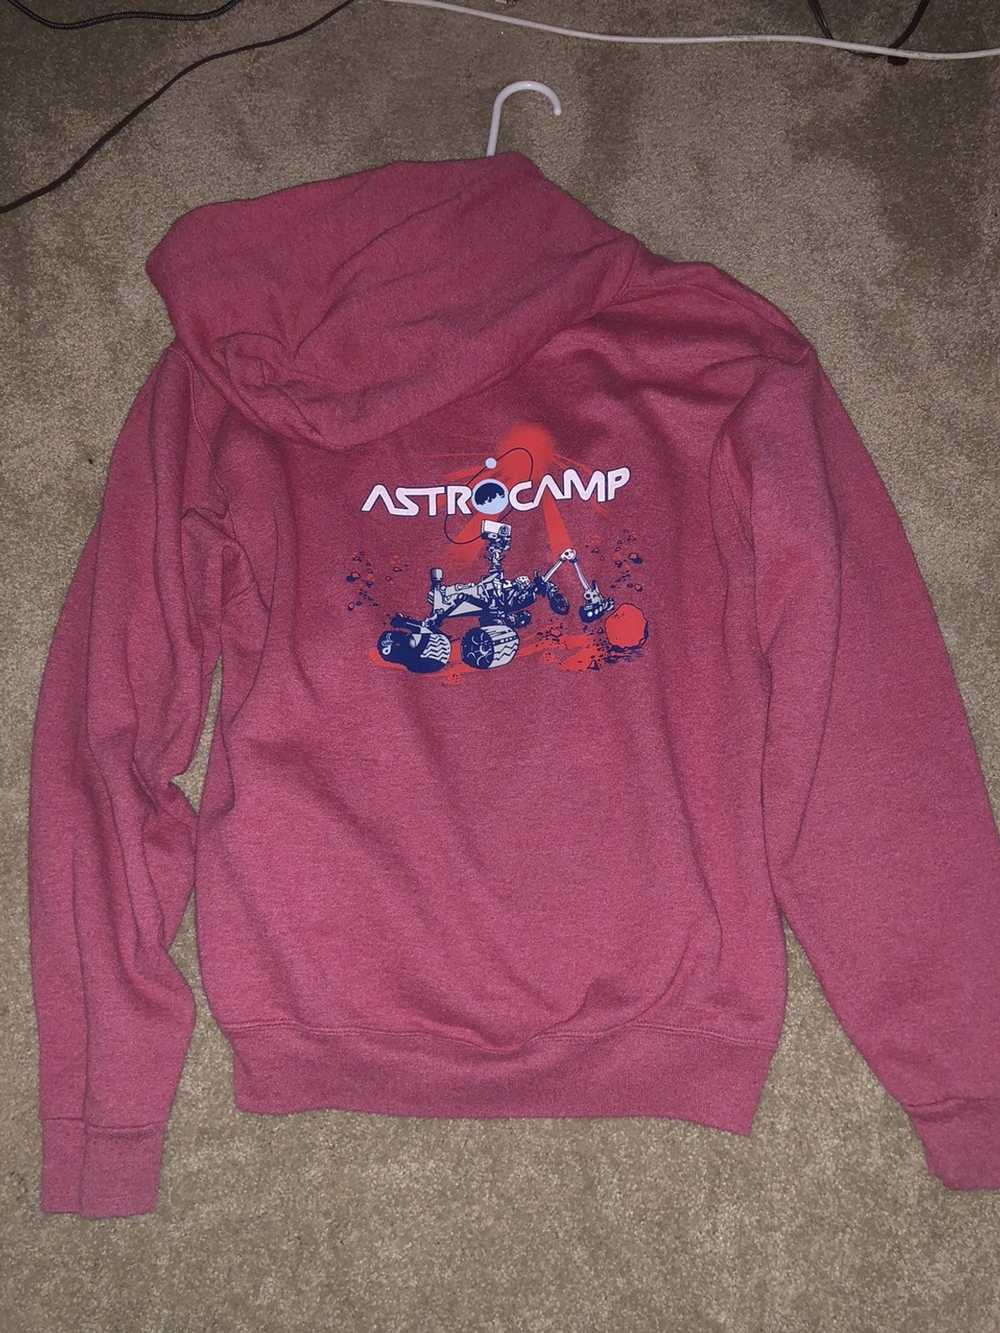 Astro Astro Camp Hoodie - image 2